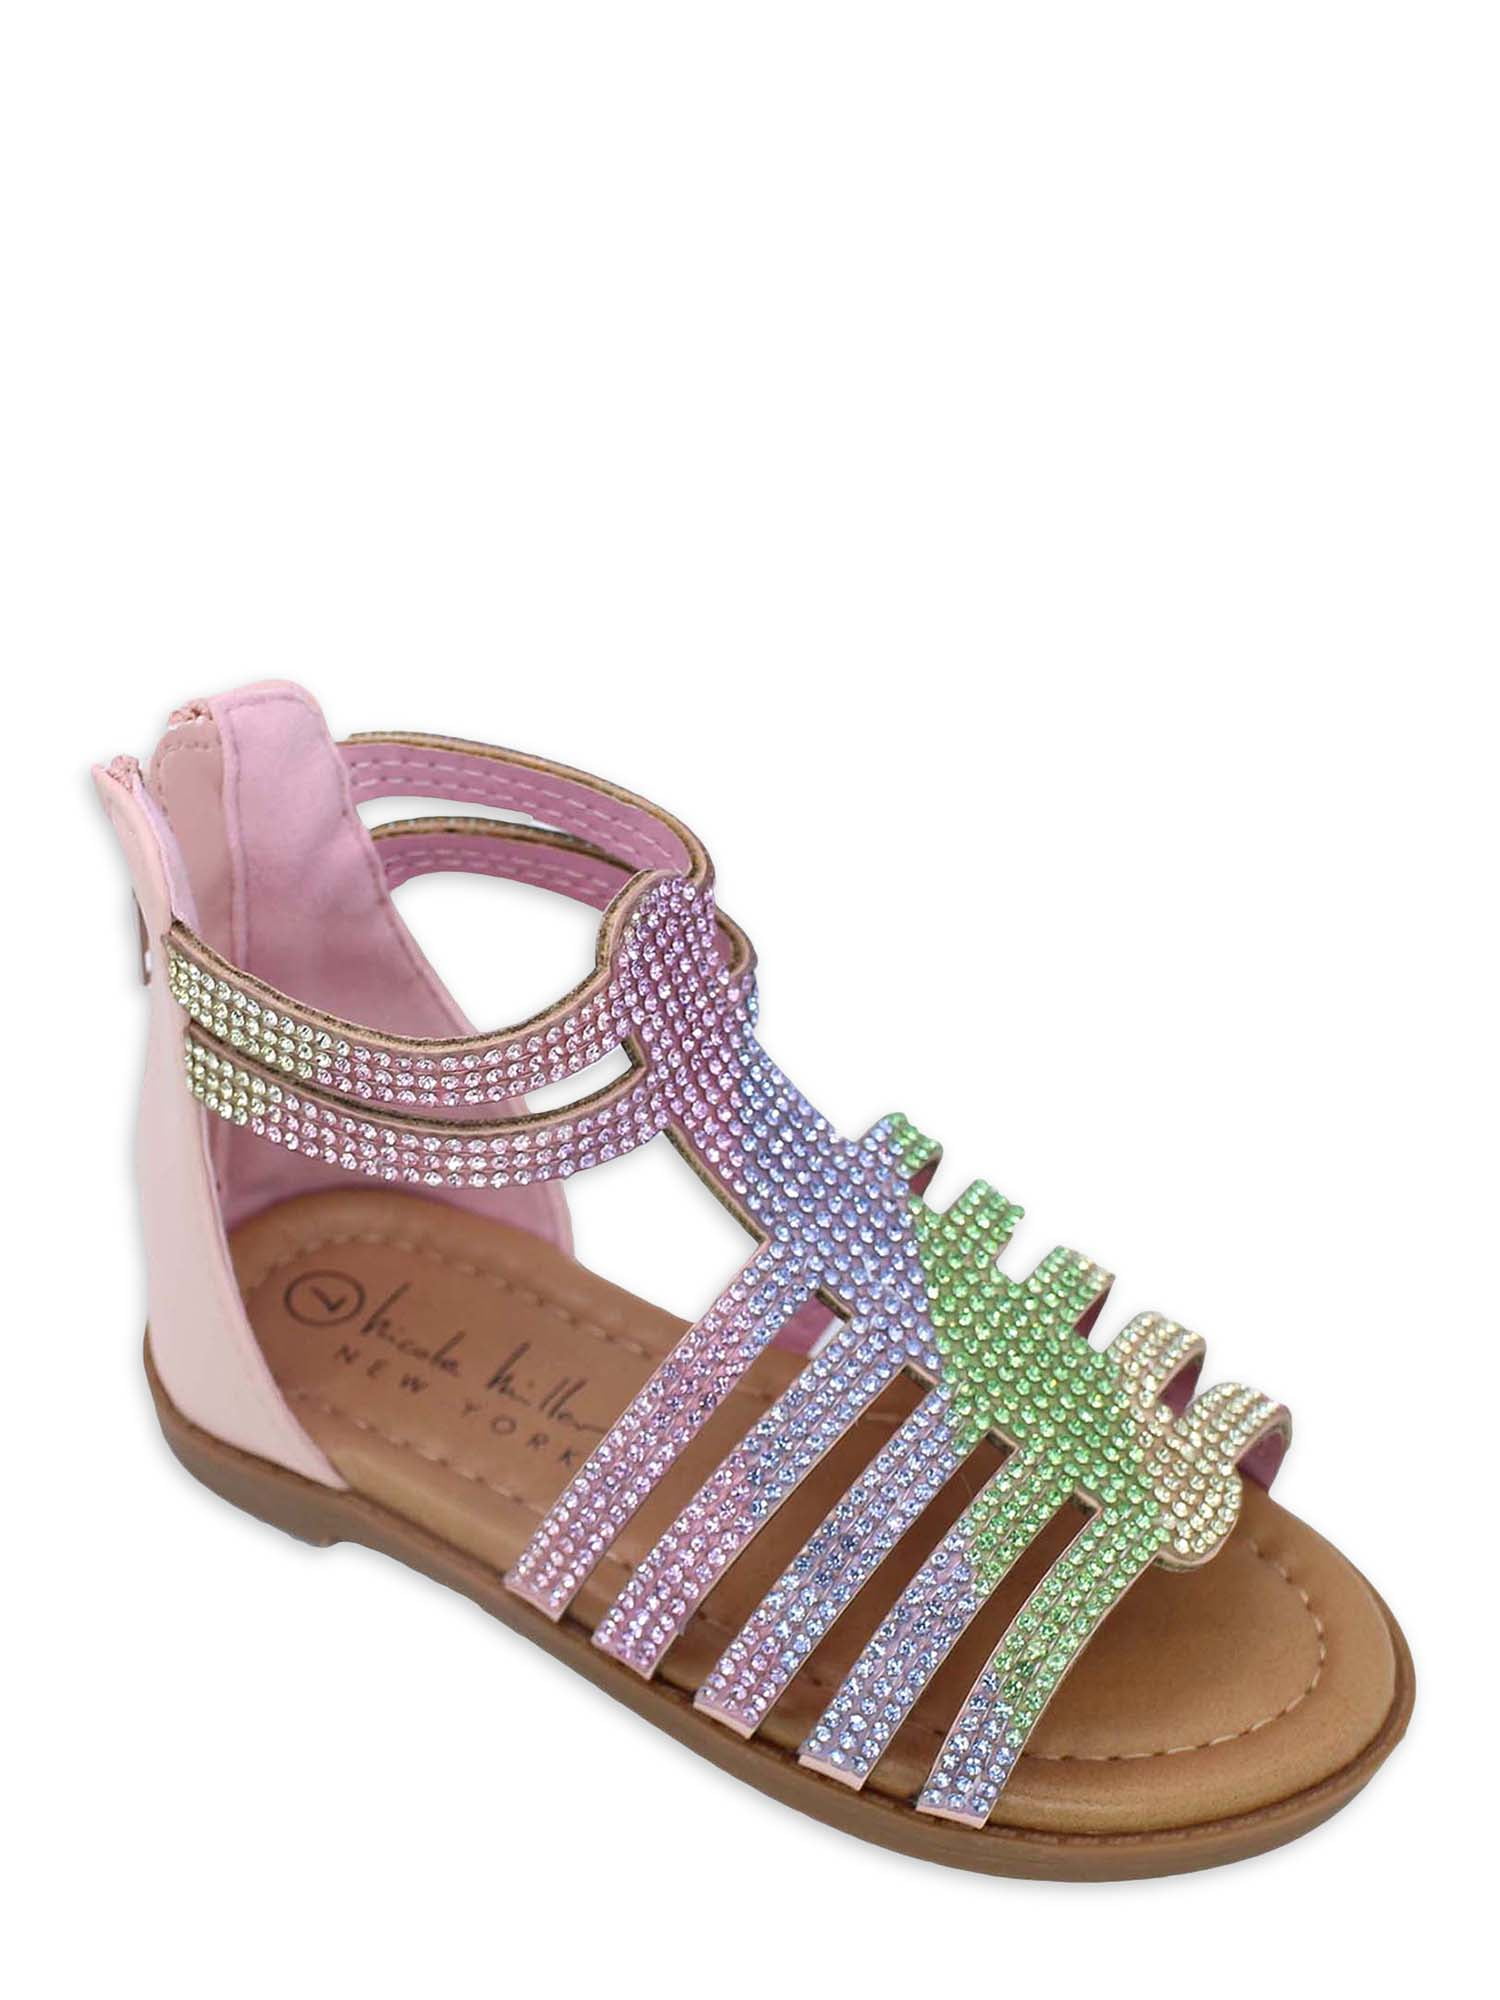 Baby Toddler Girls Adorable Gladiator Sandals Shoes Size 4-10 Black Pink White 